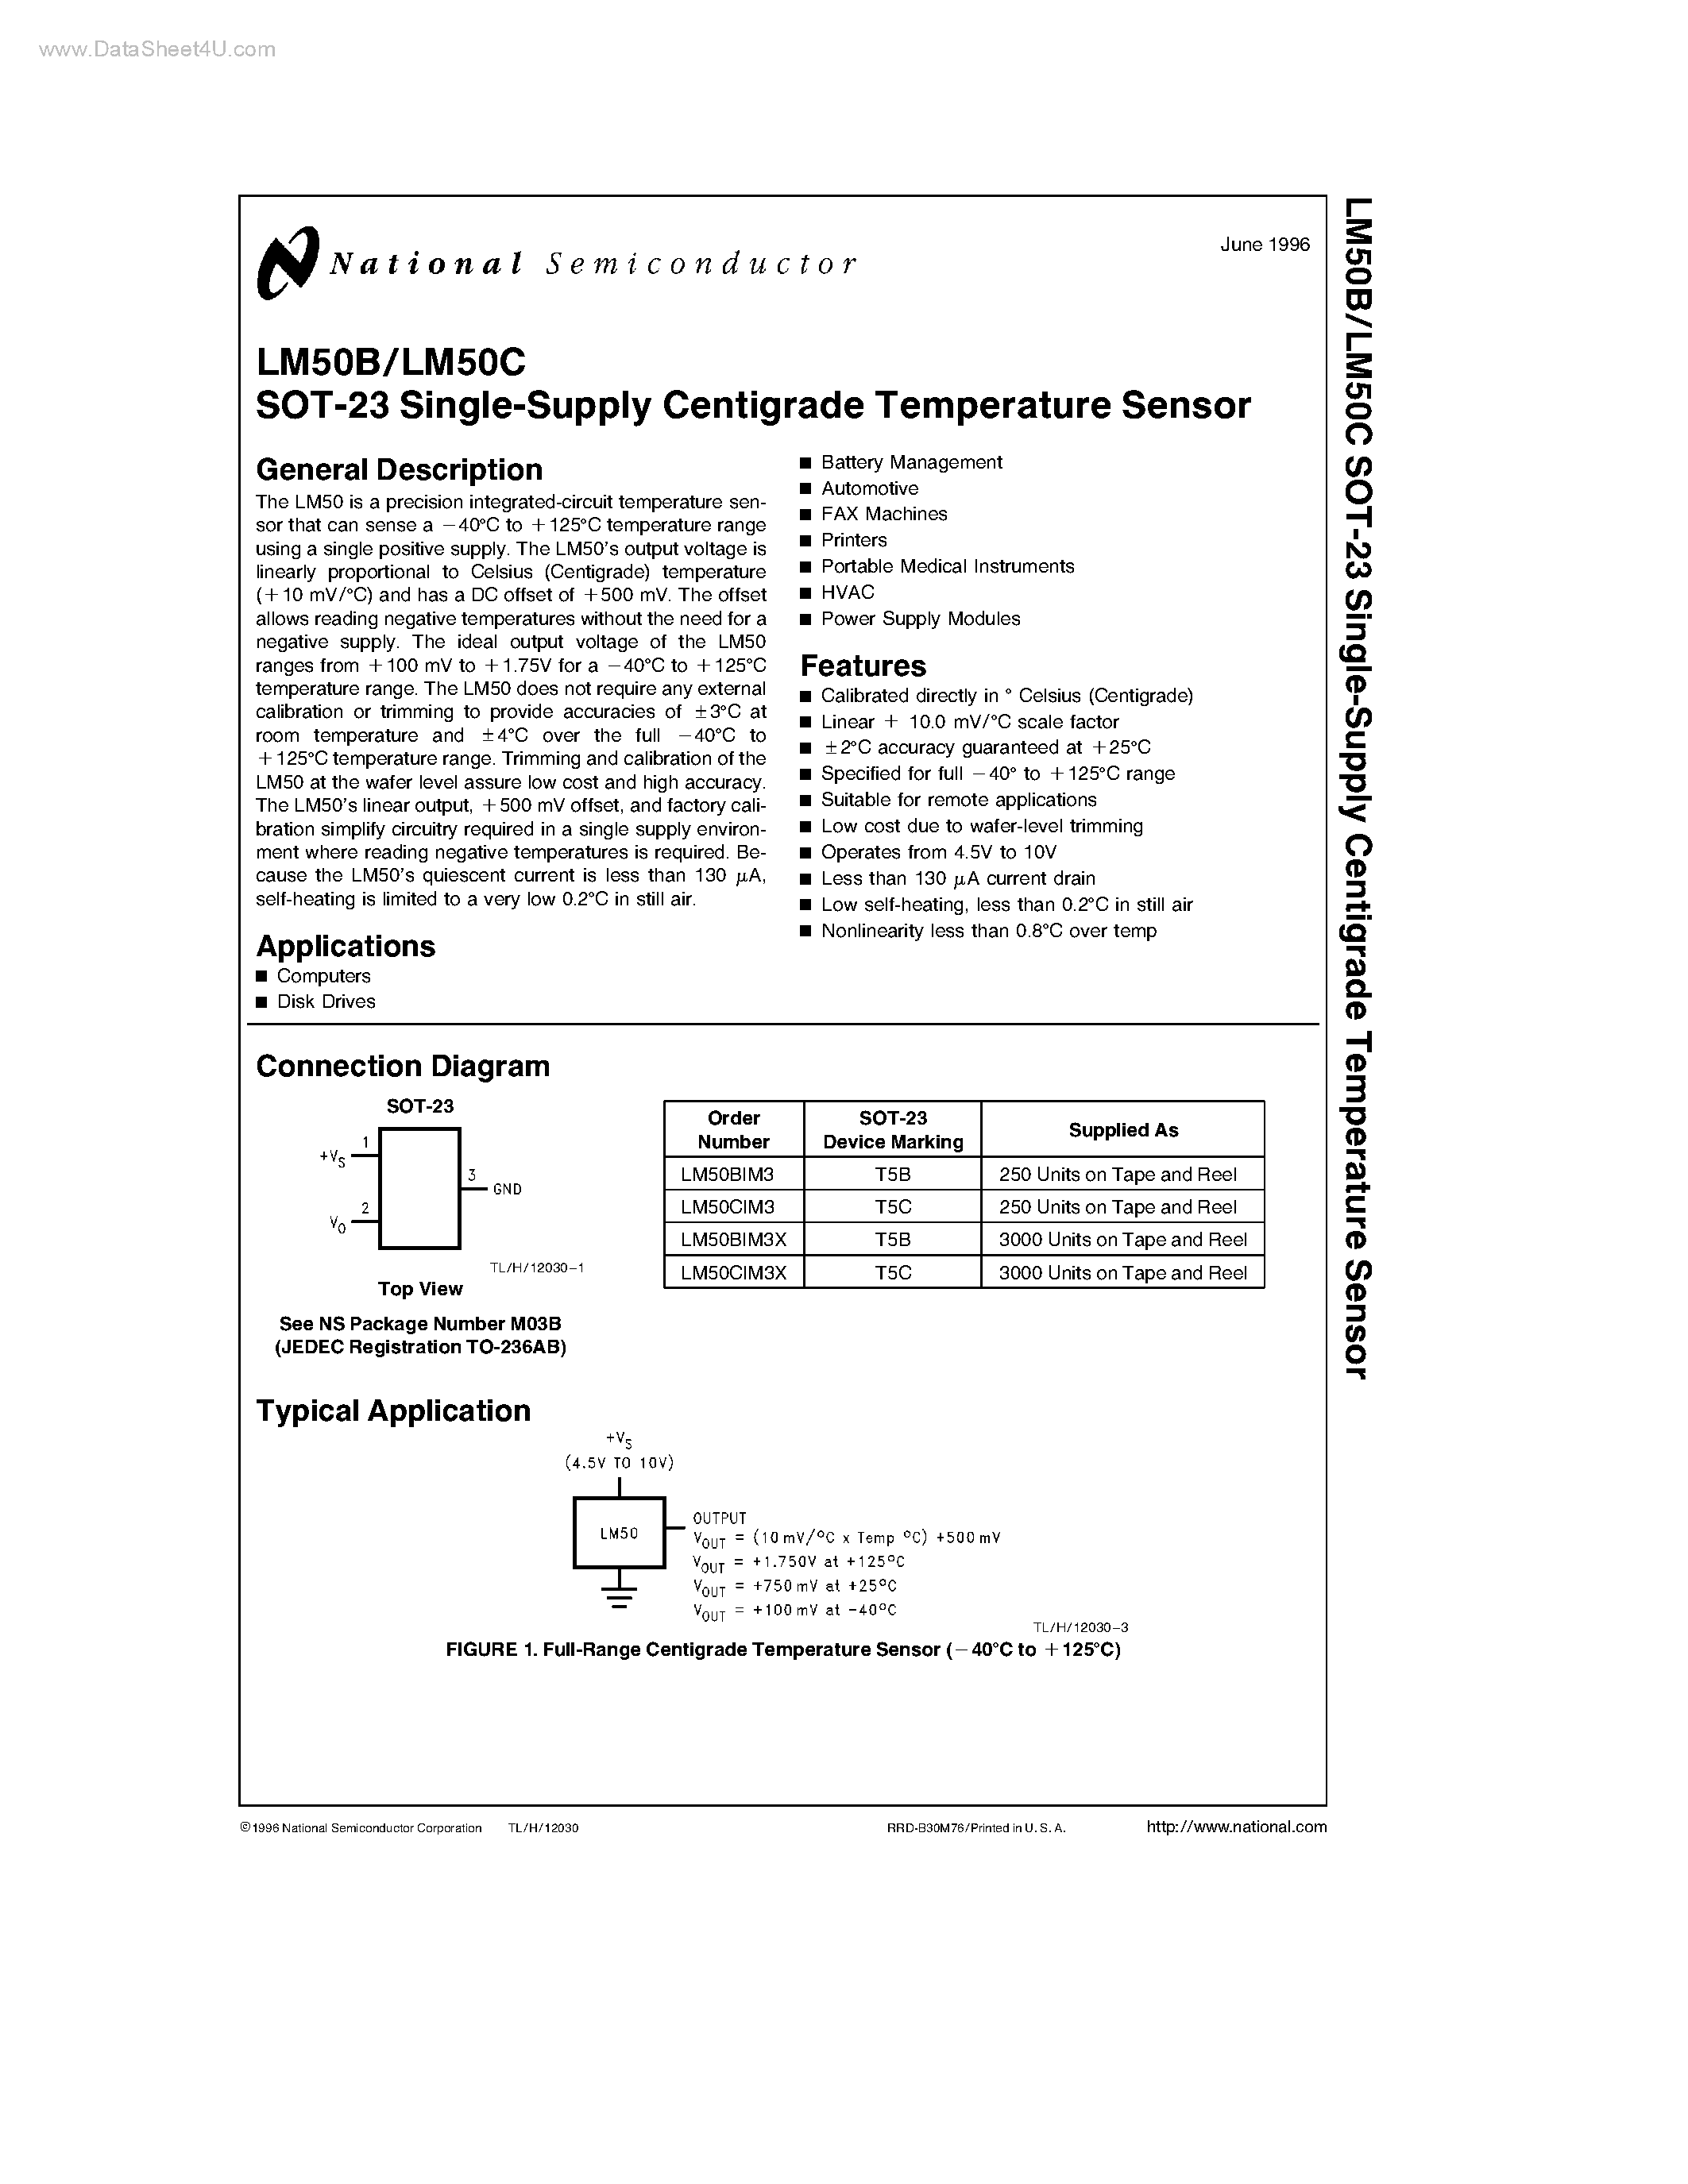 Datasheet LM50B - (LM50B / LM50C) SOT-23 Single-Supply Centigrade Temperature Sensor page 1